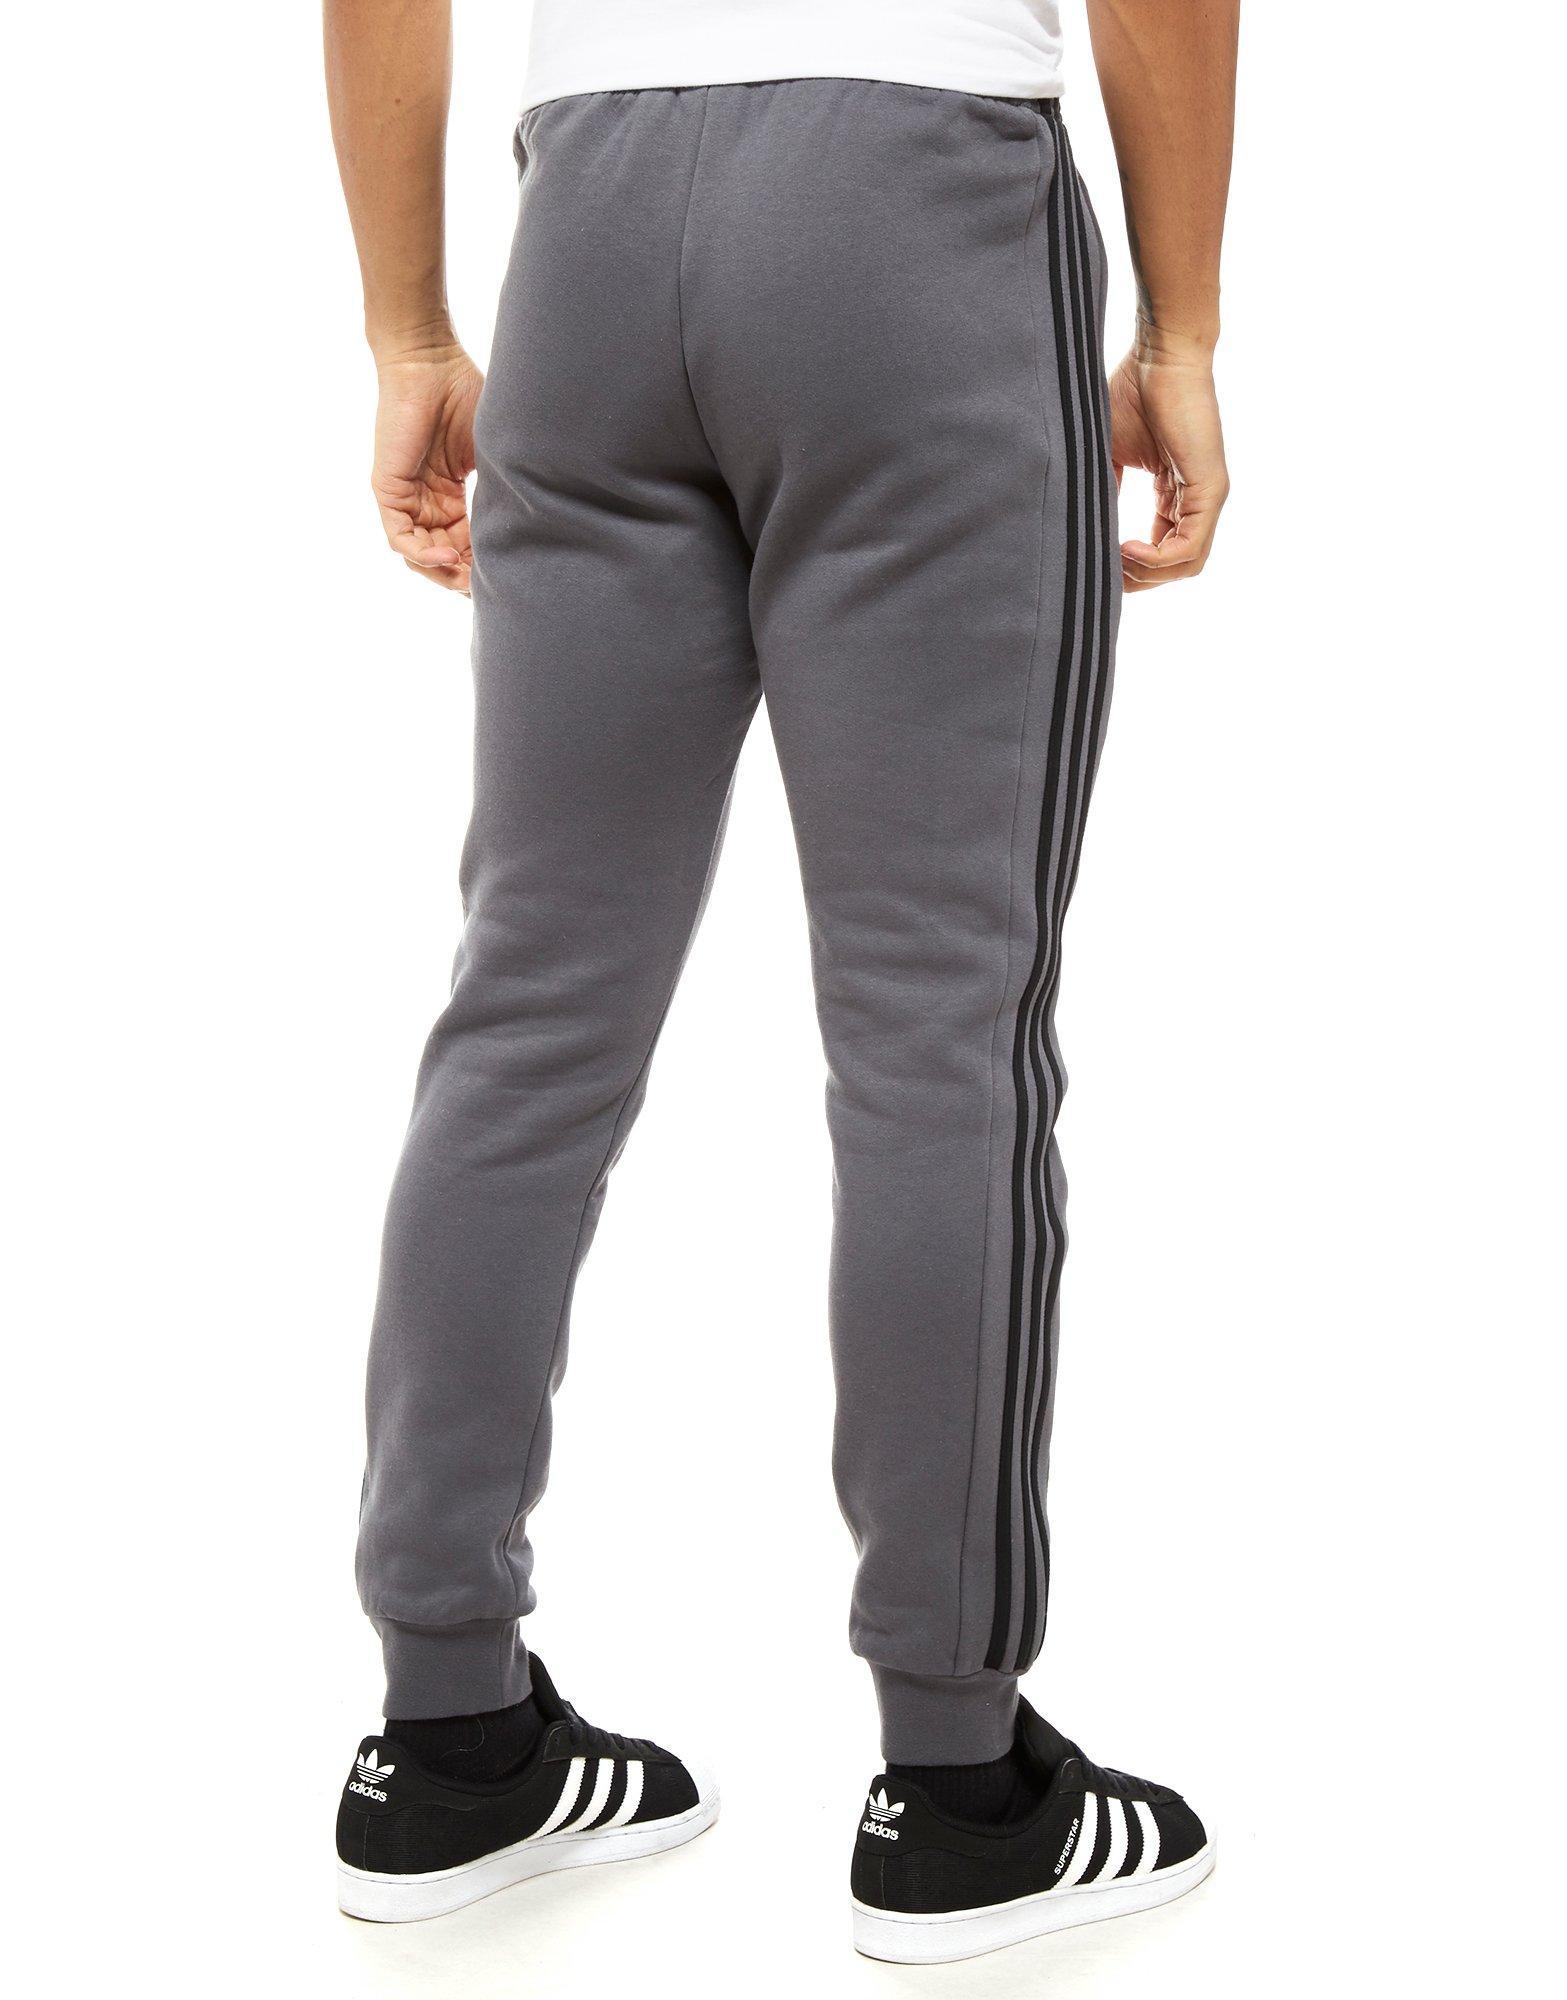 adidas Originals Fleece Id96 Track Pants in Grey/Black (Grey) for Men